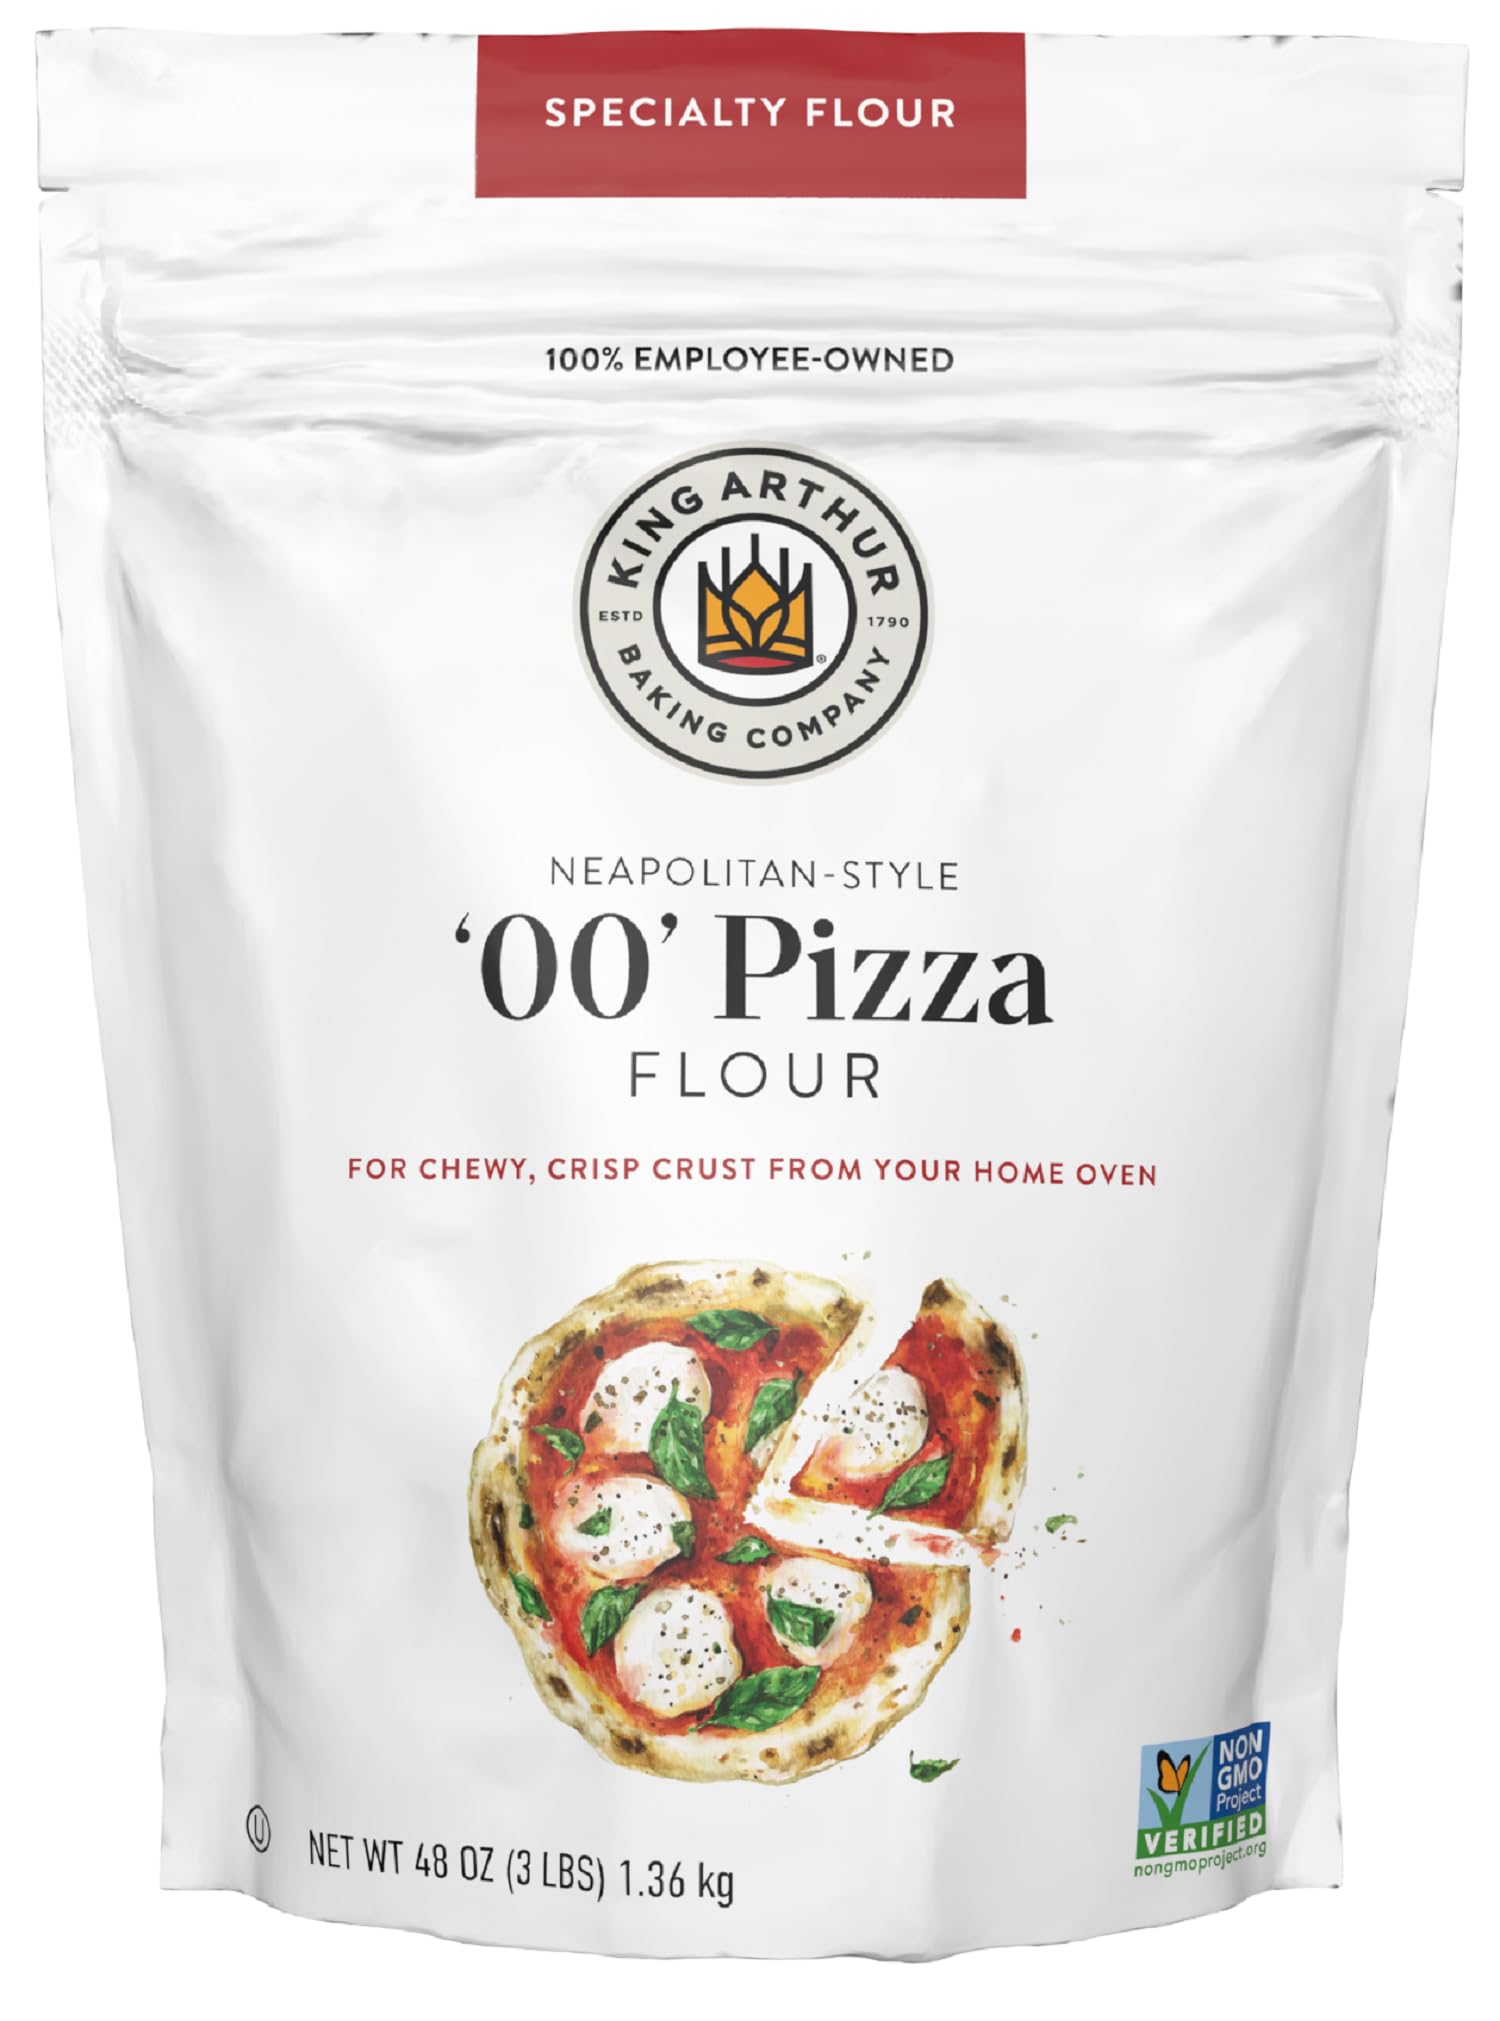 King Arthur 00 Pizza Flour, Non-GMO Project Verified, 100% American Grown Wheat, 3lb